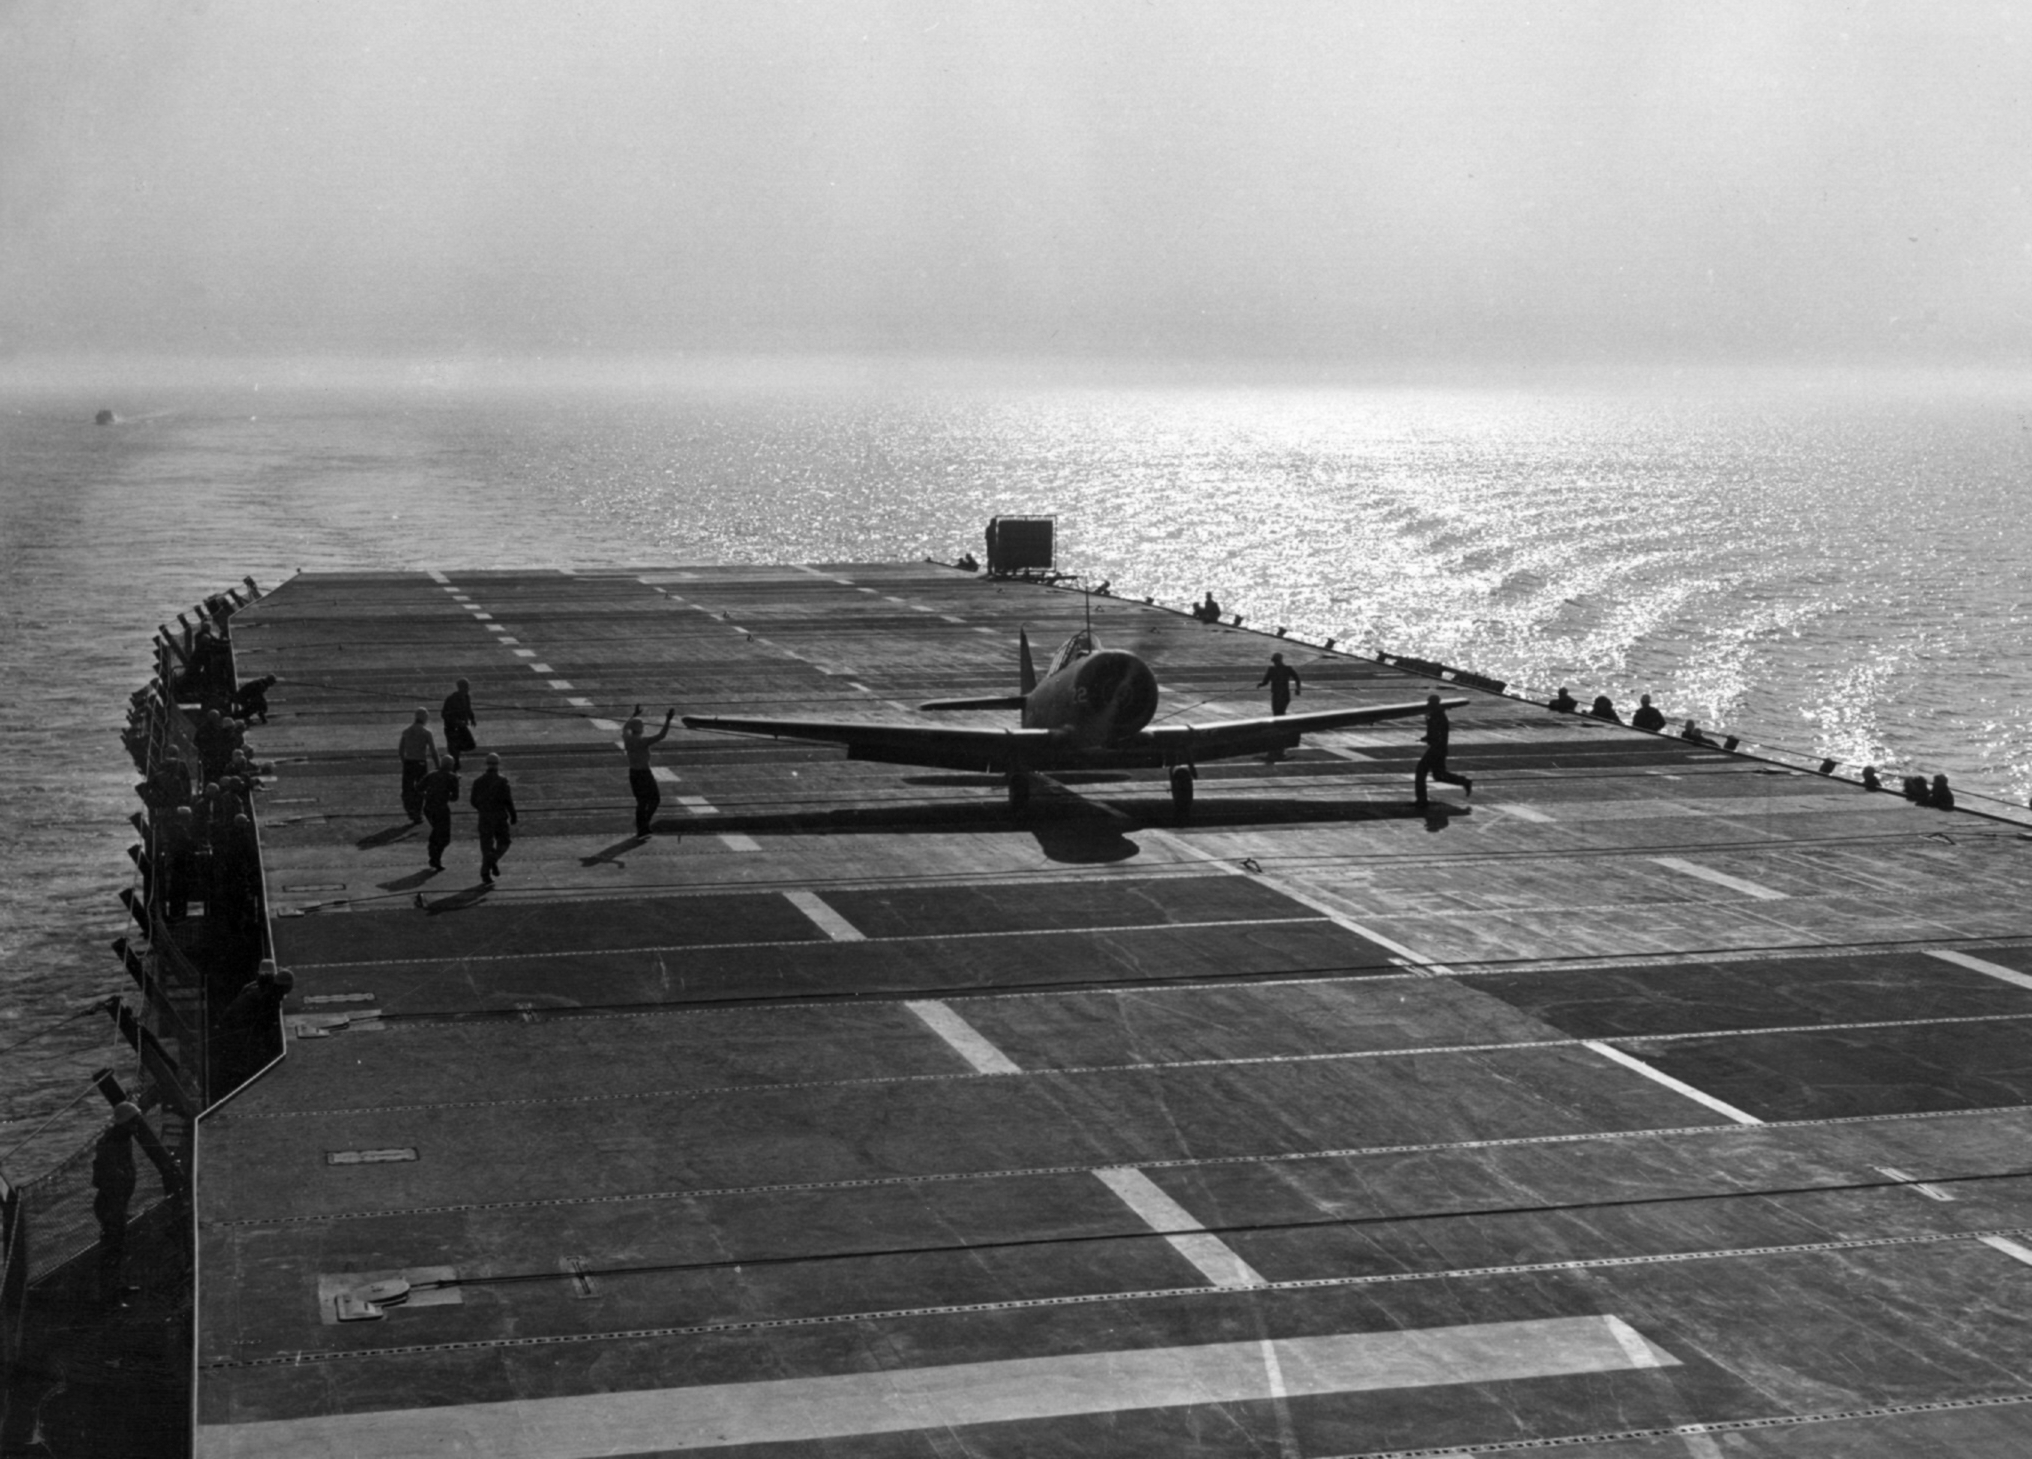 SNJ Texan aircraft having just landed on USS Sable, Lake Michigan, United States, 10 Jun 1943